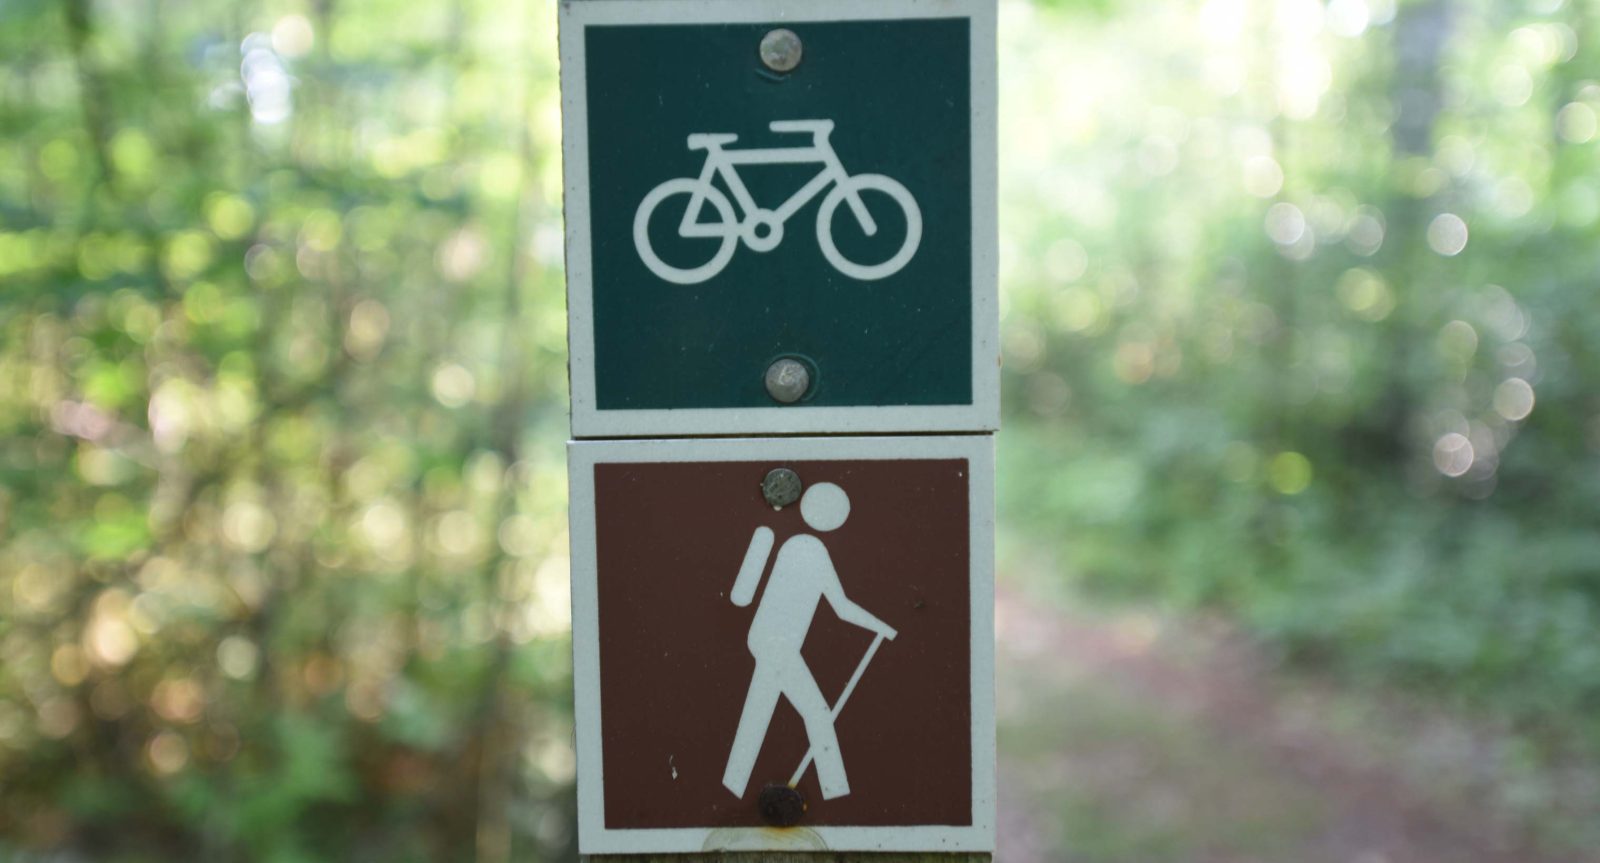 Lumberjack Trail allowed activities sign